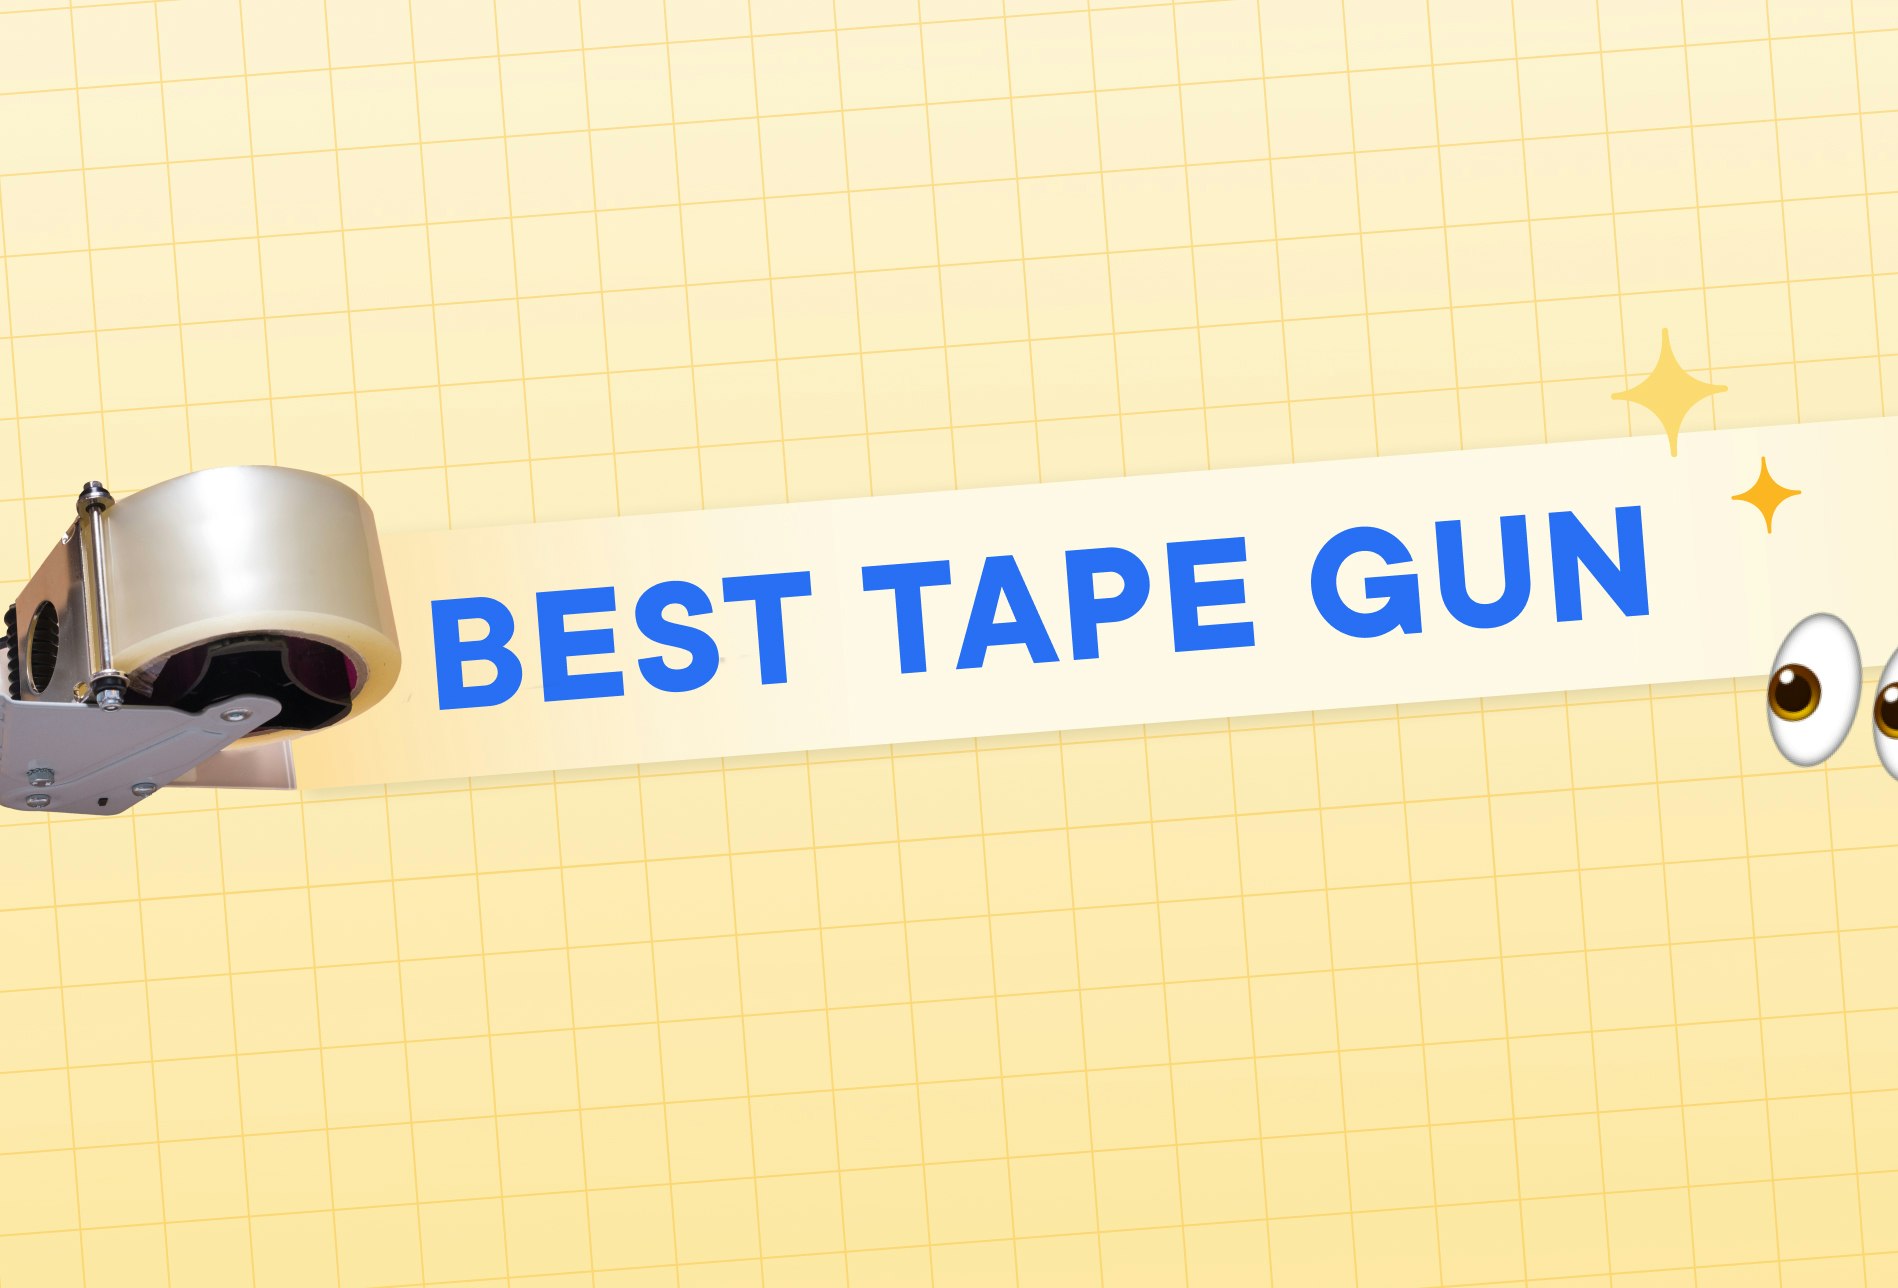 Best tape gun